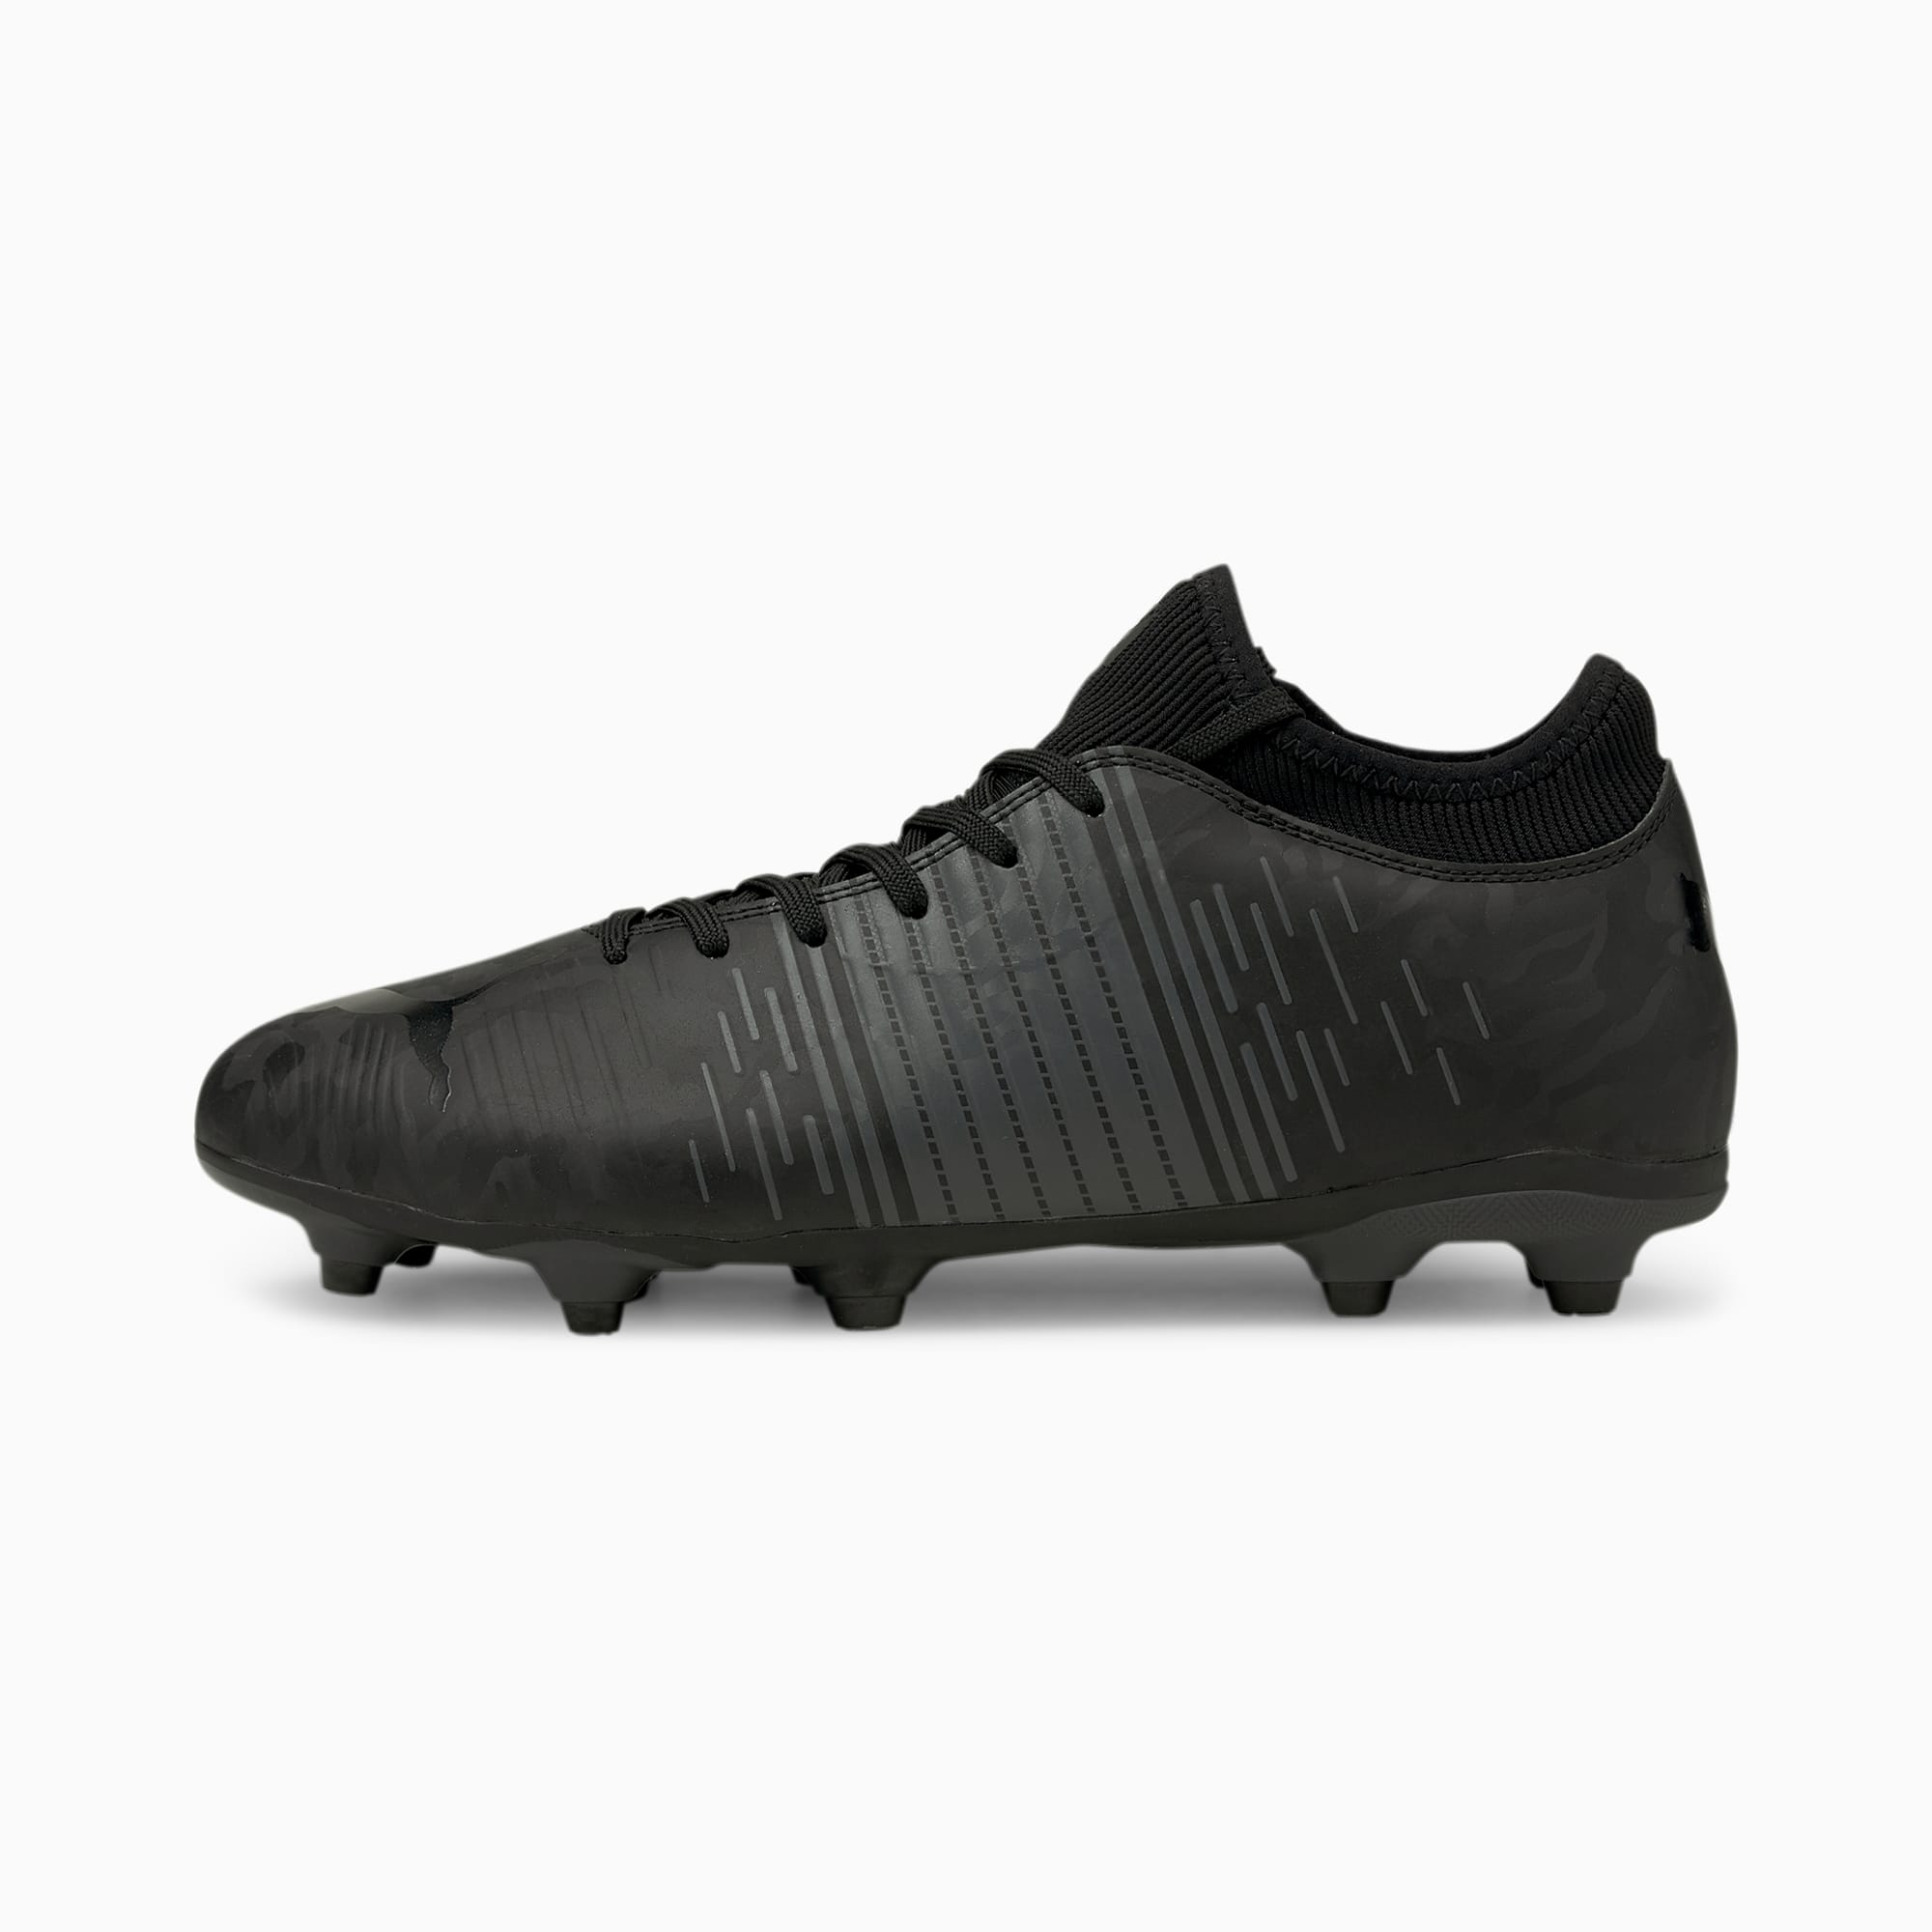 PUMA Chaussures de football FUTURE Z 4.1 FG/AG homme, Noir/Gris, Taille 42, Chaussures